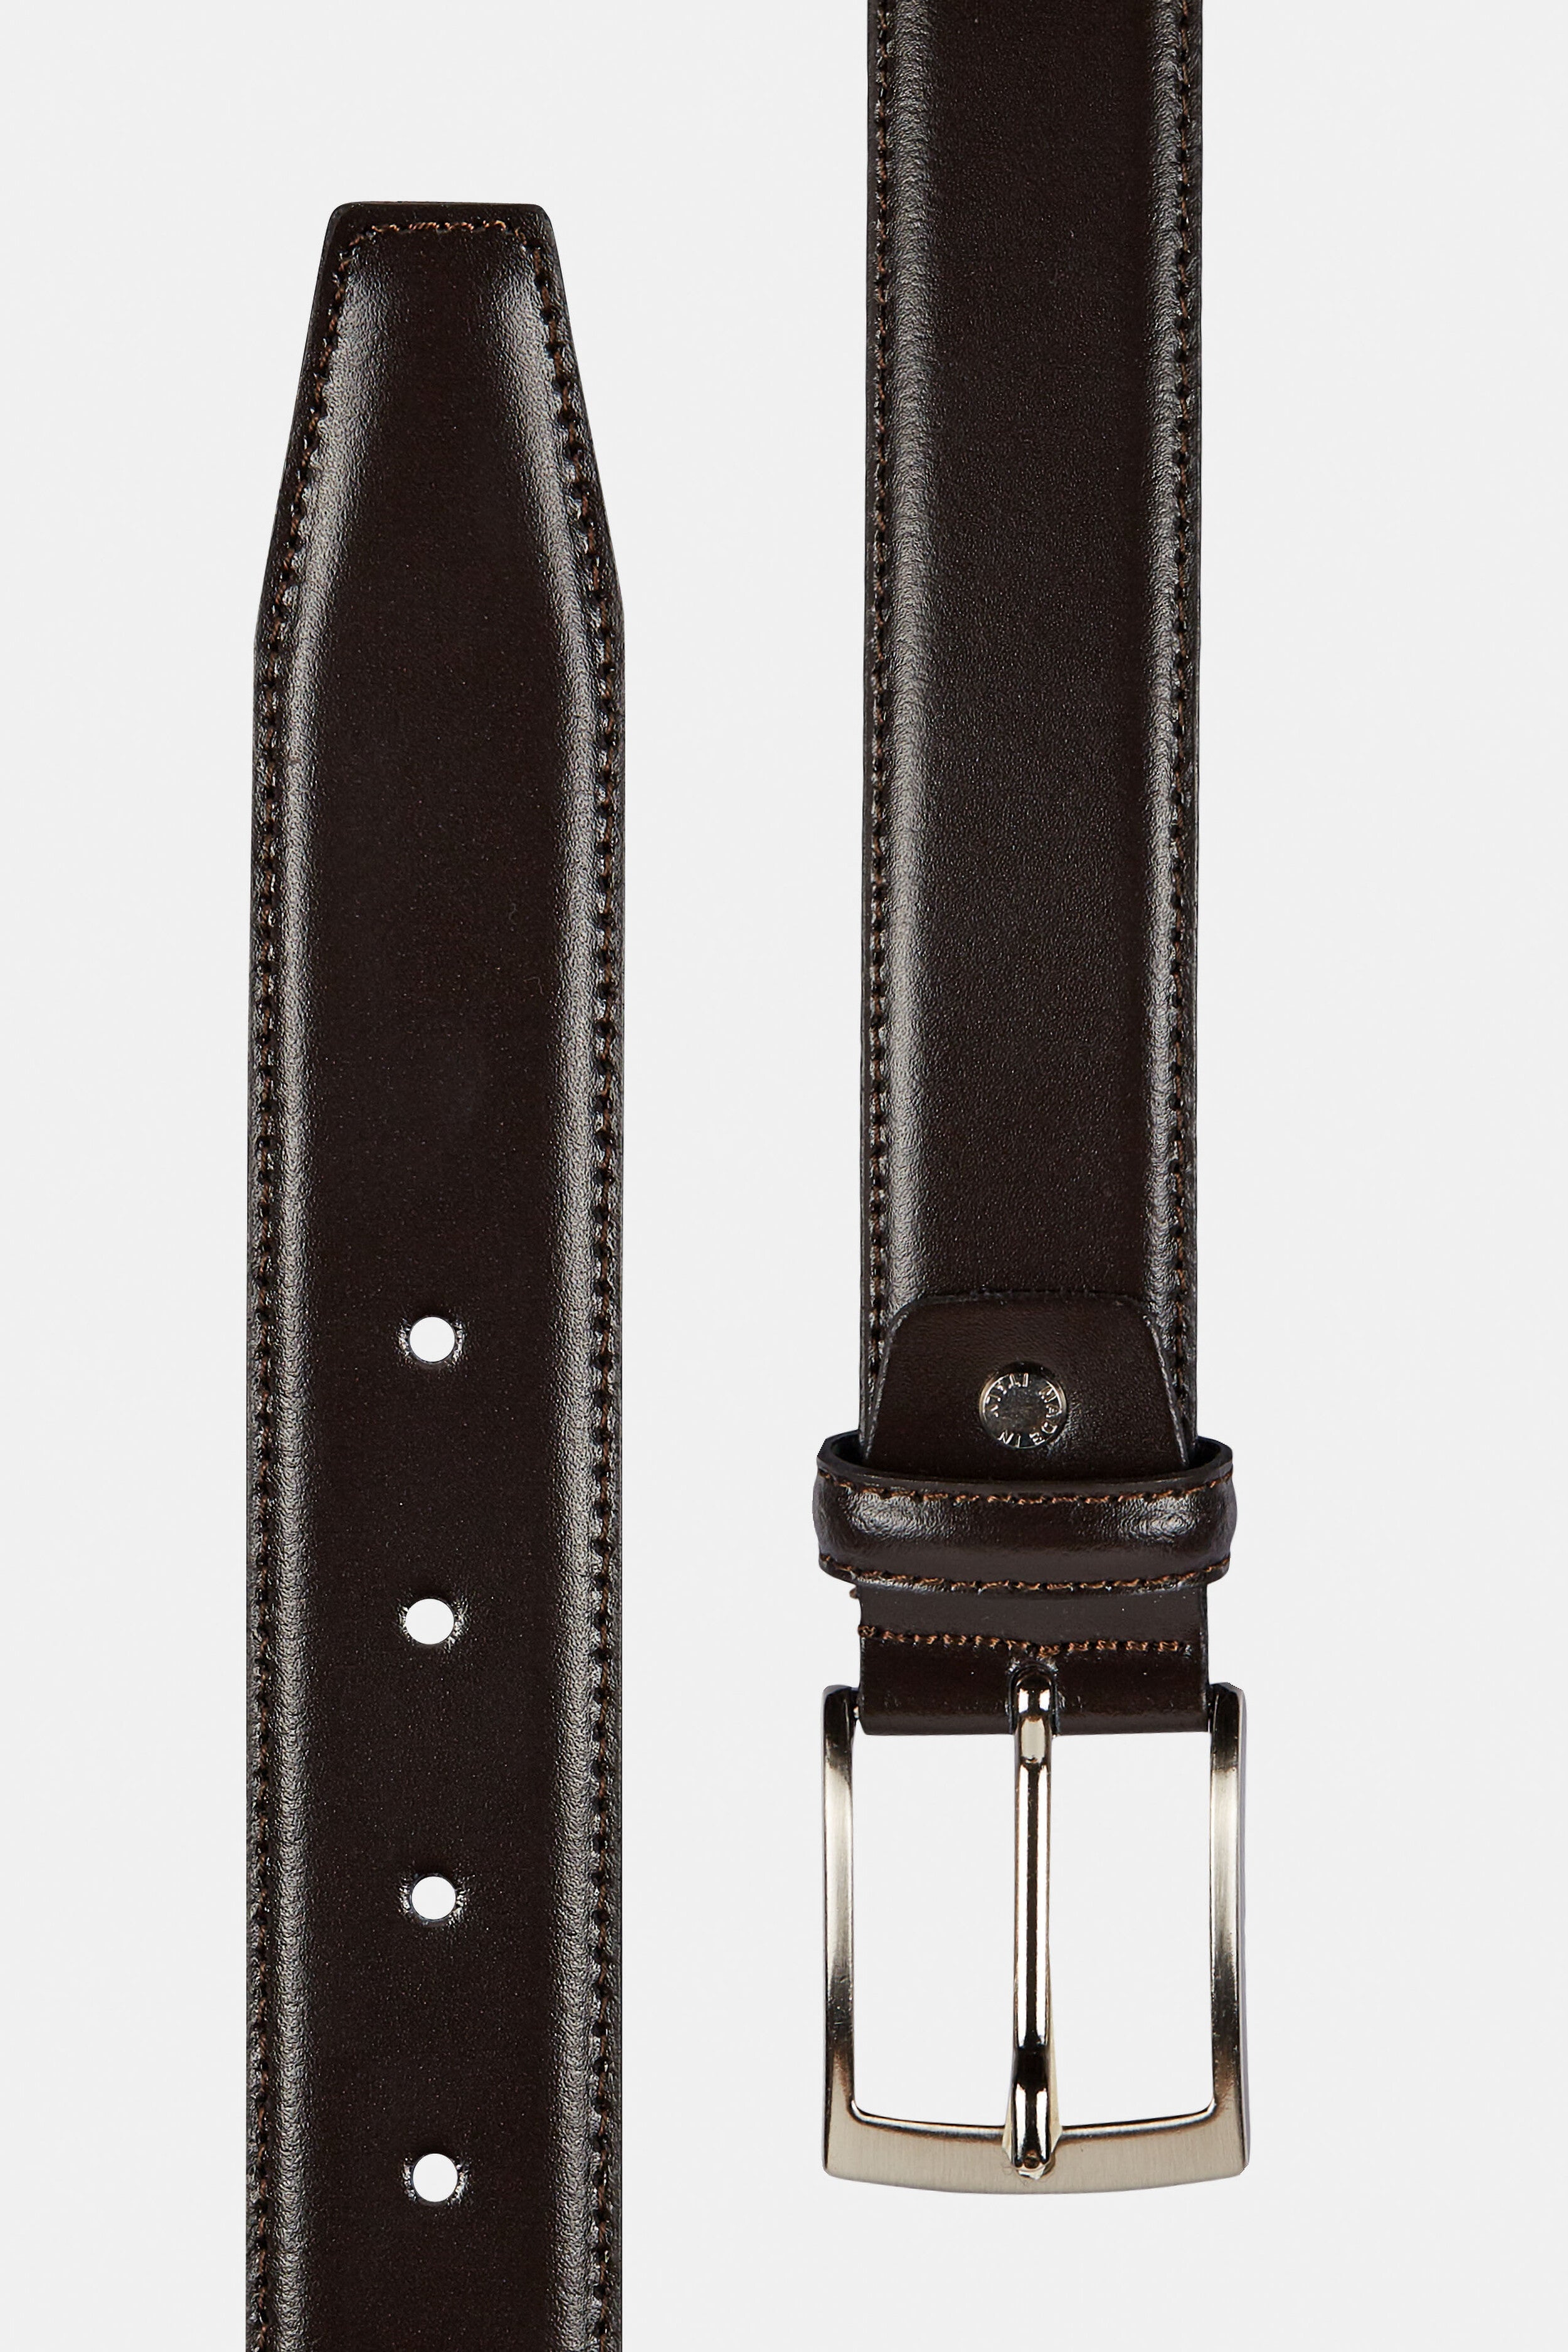 Men’s leather belt - Dark brown